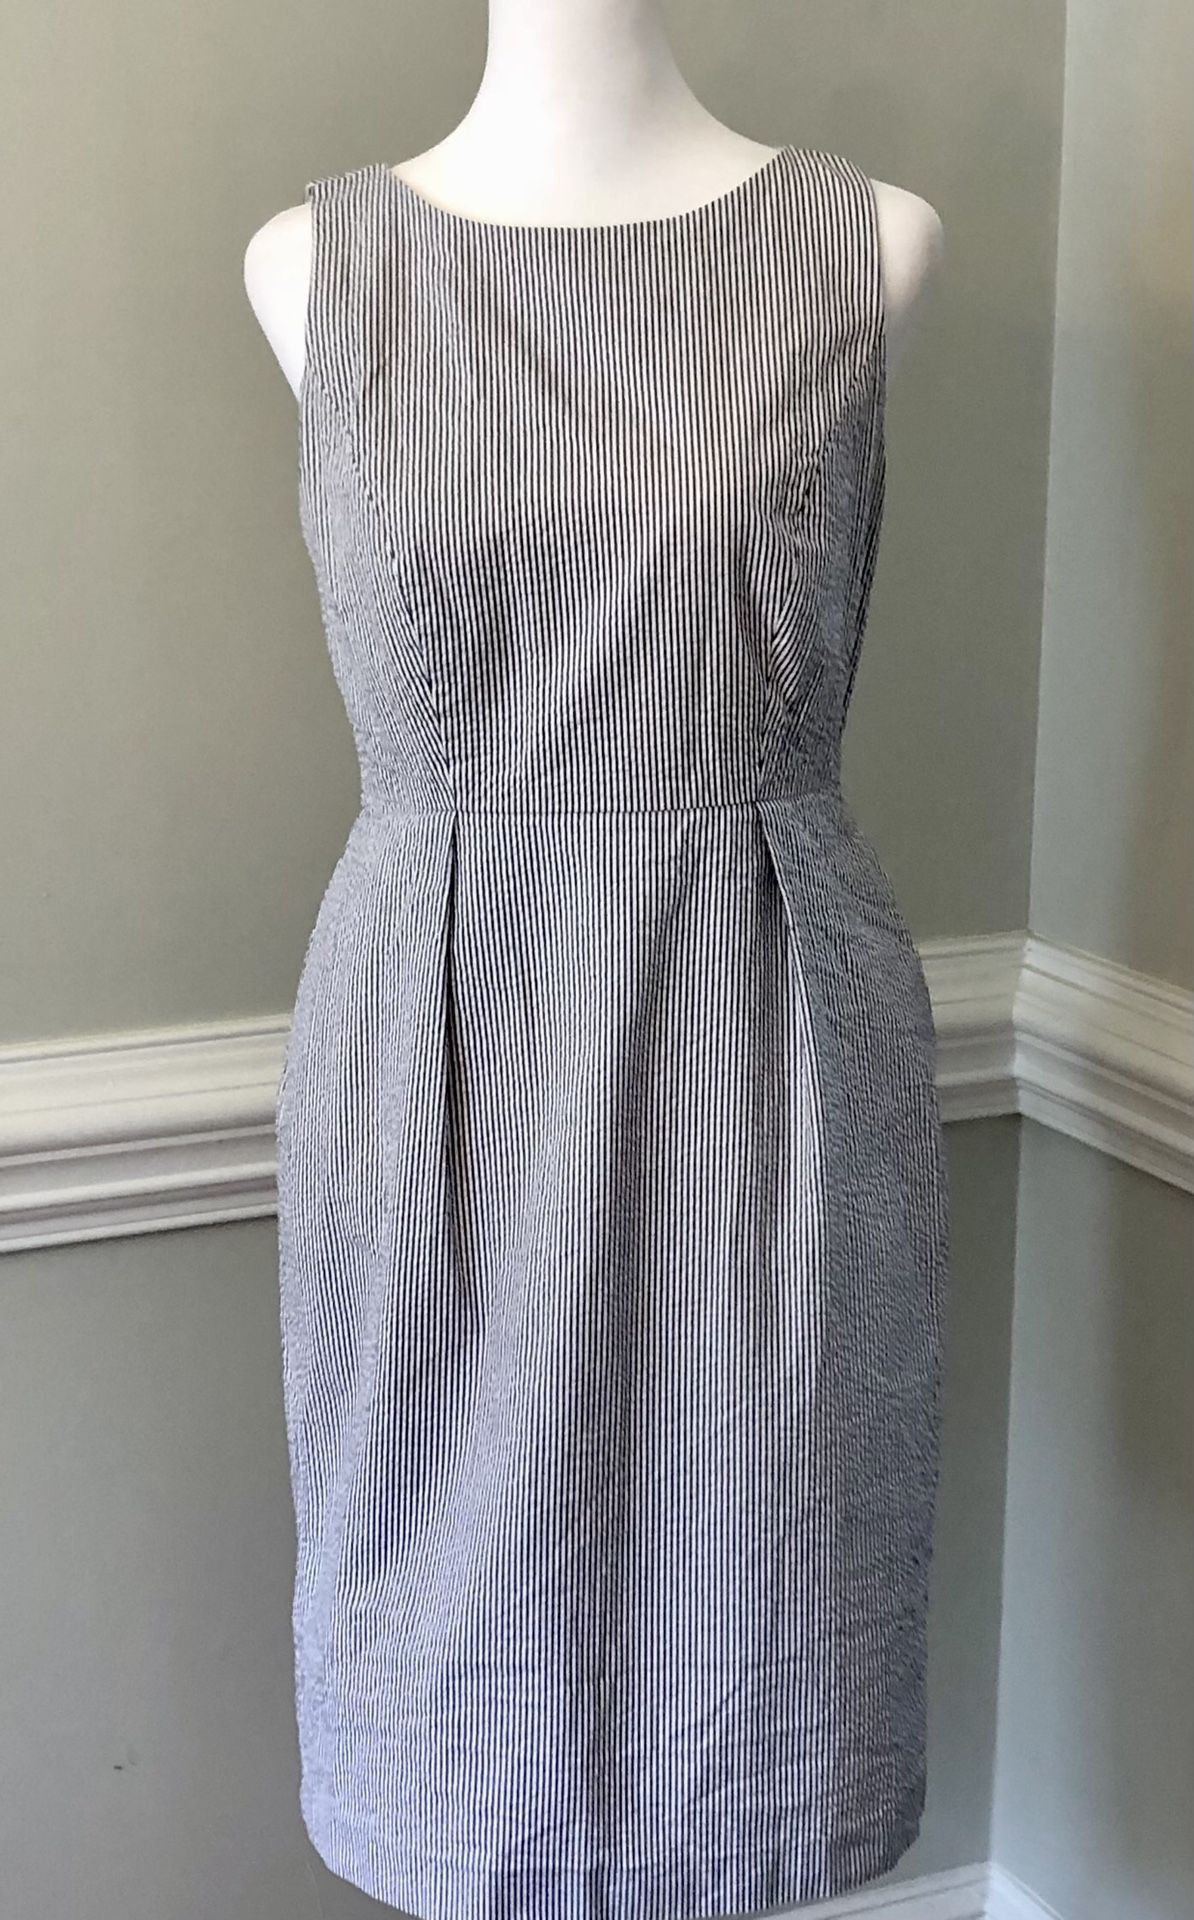 Looks New, Women’s Seersucker Sleeveless Dress from Brooks Brothers (4 P)